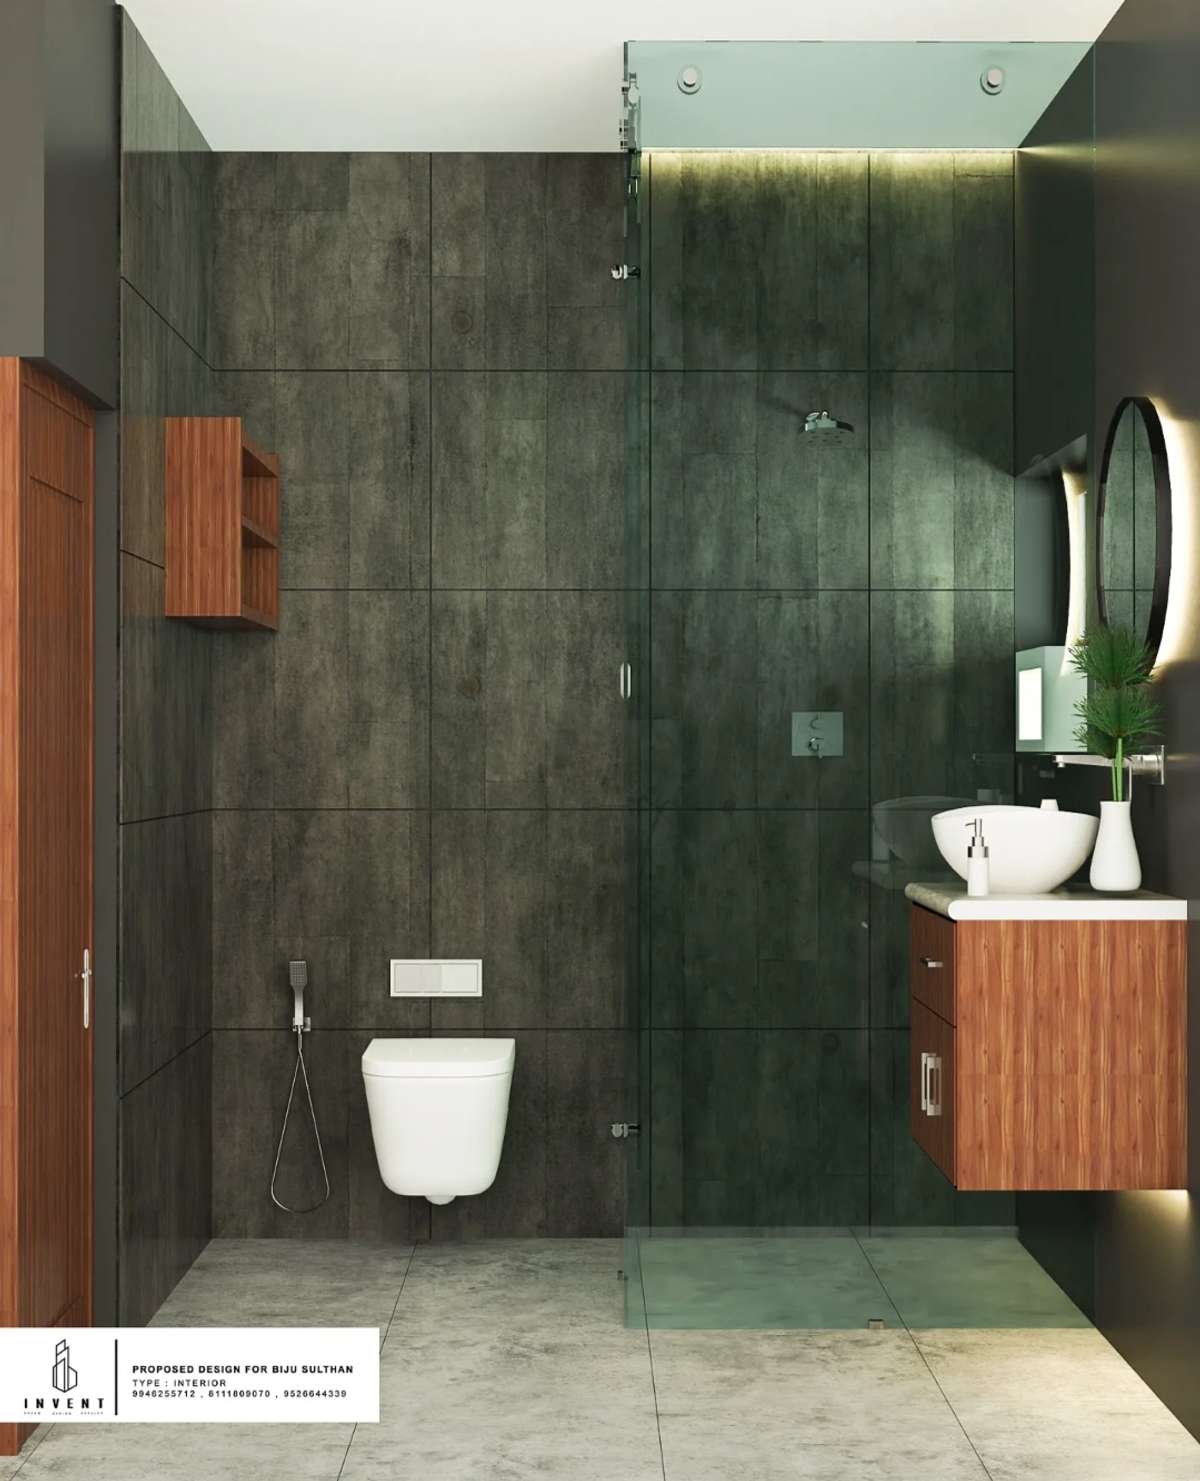 toilet design 
#kerala#design #toilets
#trending #models
#tiles
#bathroomtiles
#sanitarywares 